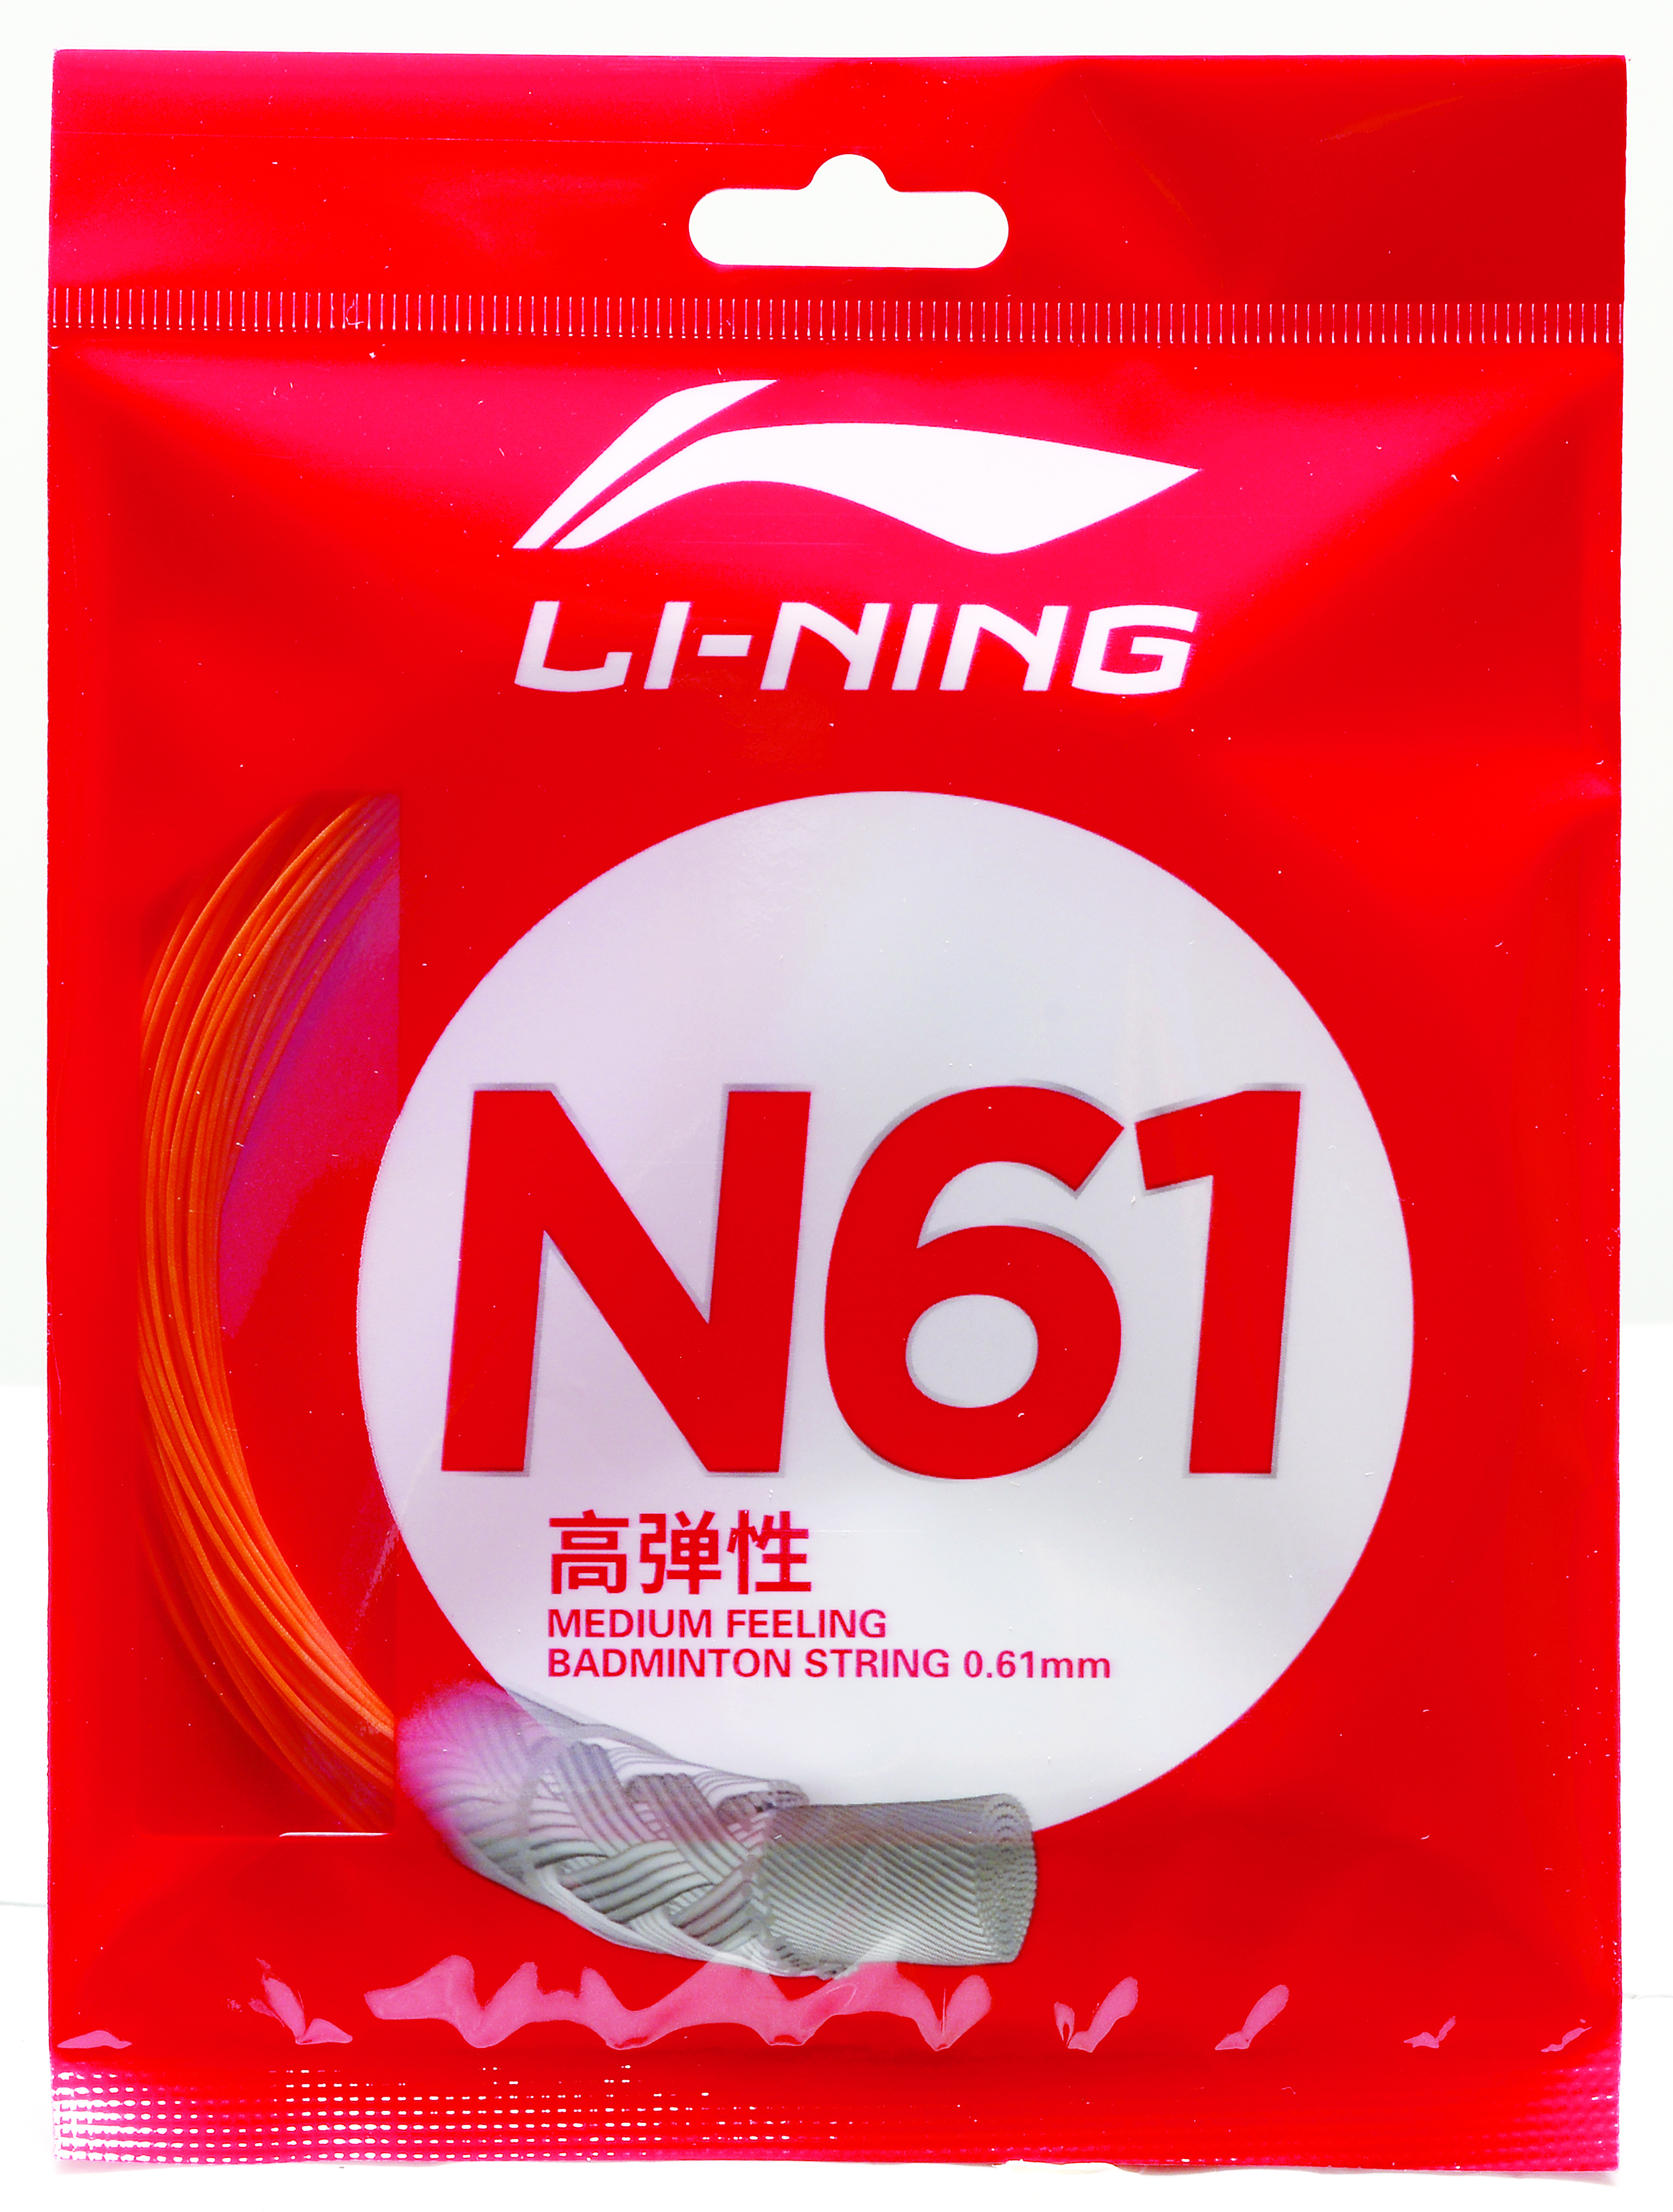 Li-Ning Badmintonsaite N61 im 10m-Set orange